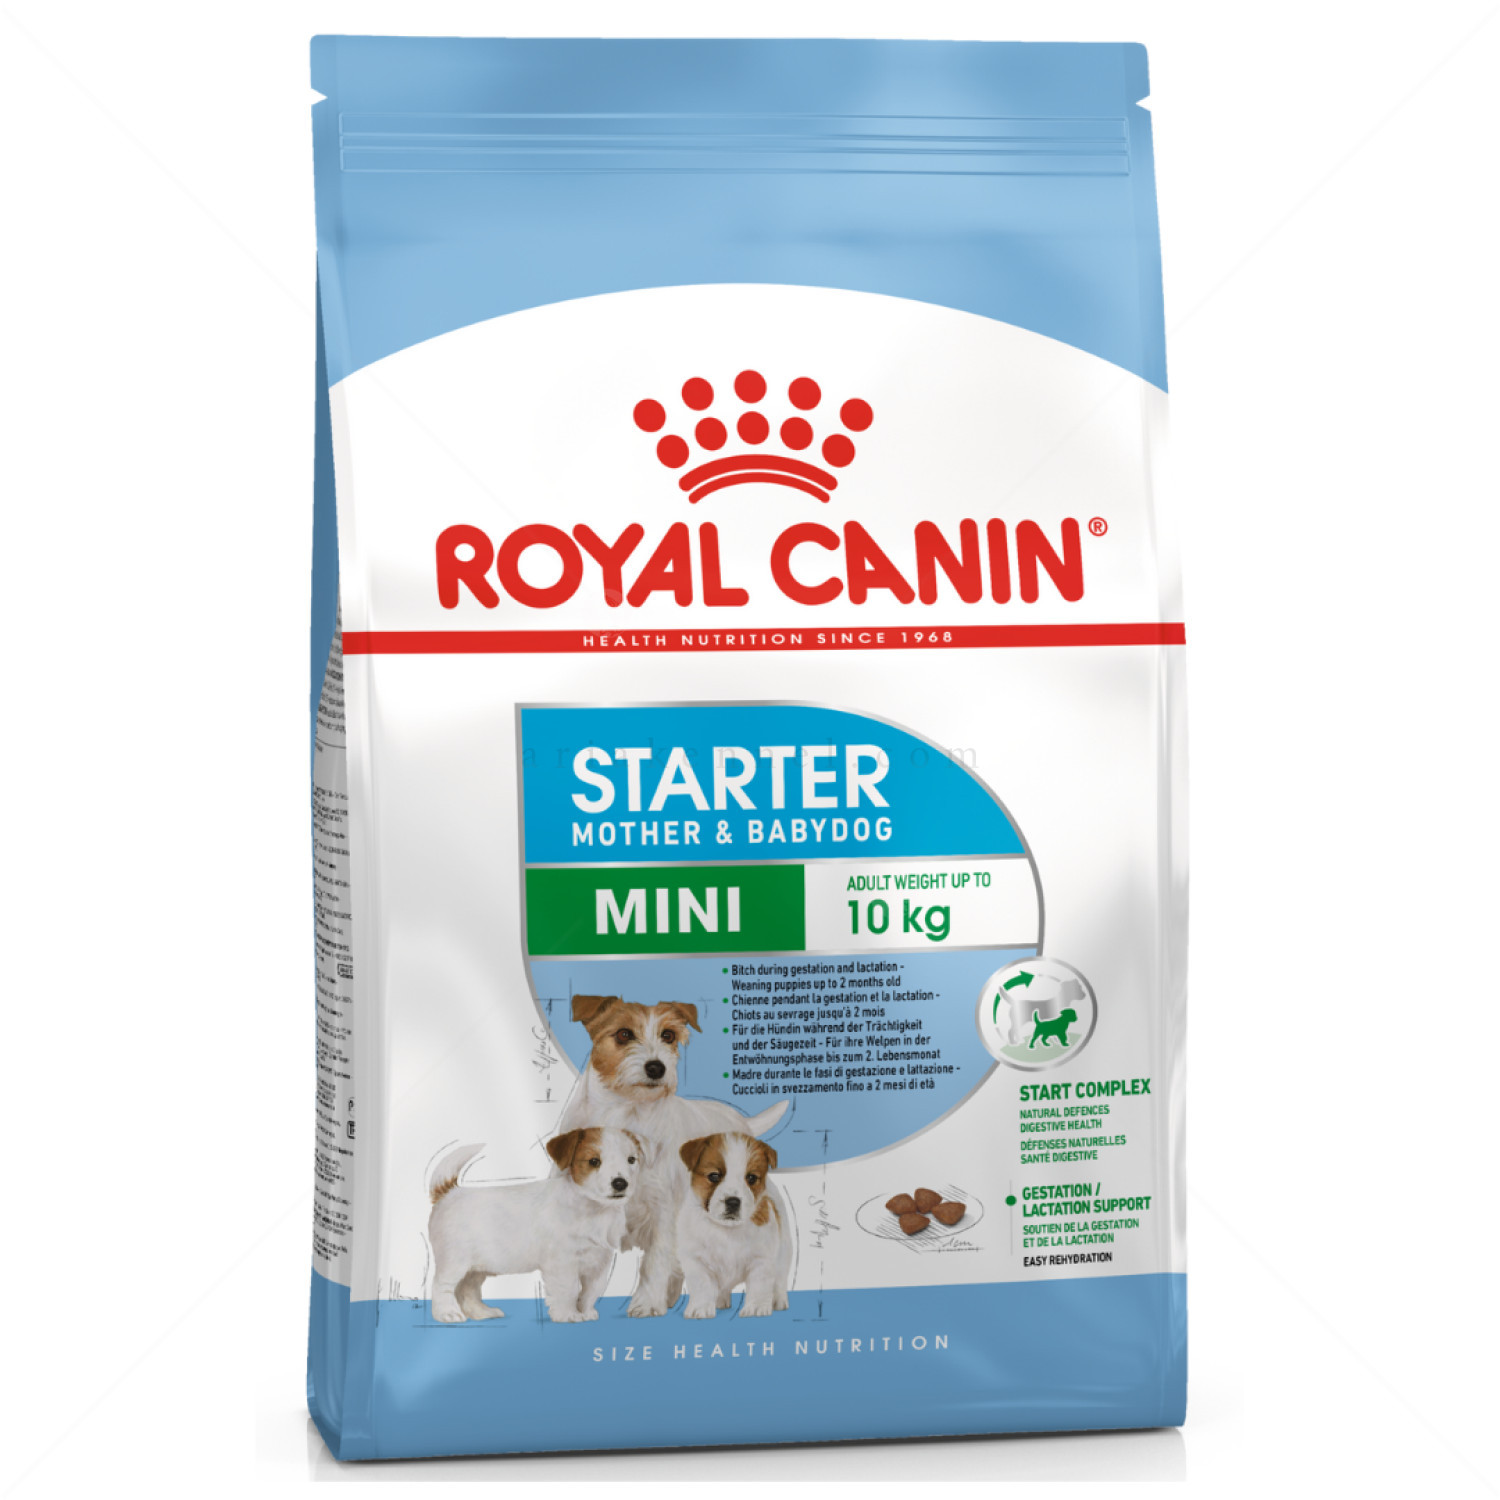 ROYAL CANIN Mini Starter Mother & Babydog - 8 кг